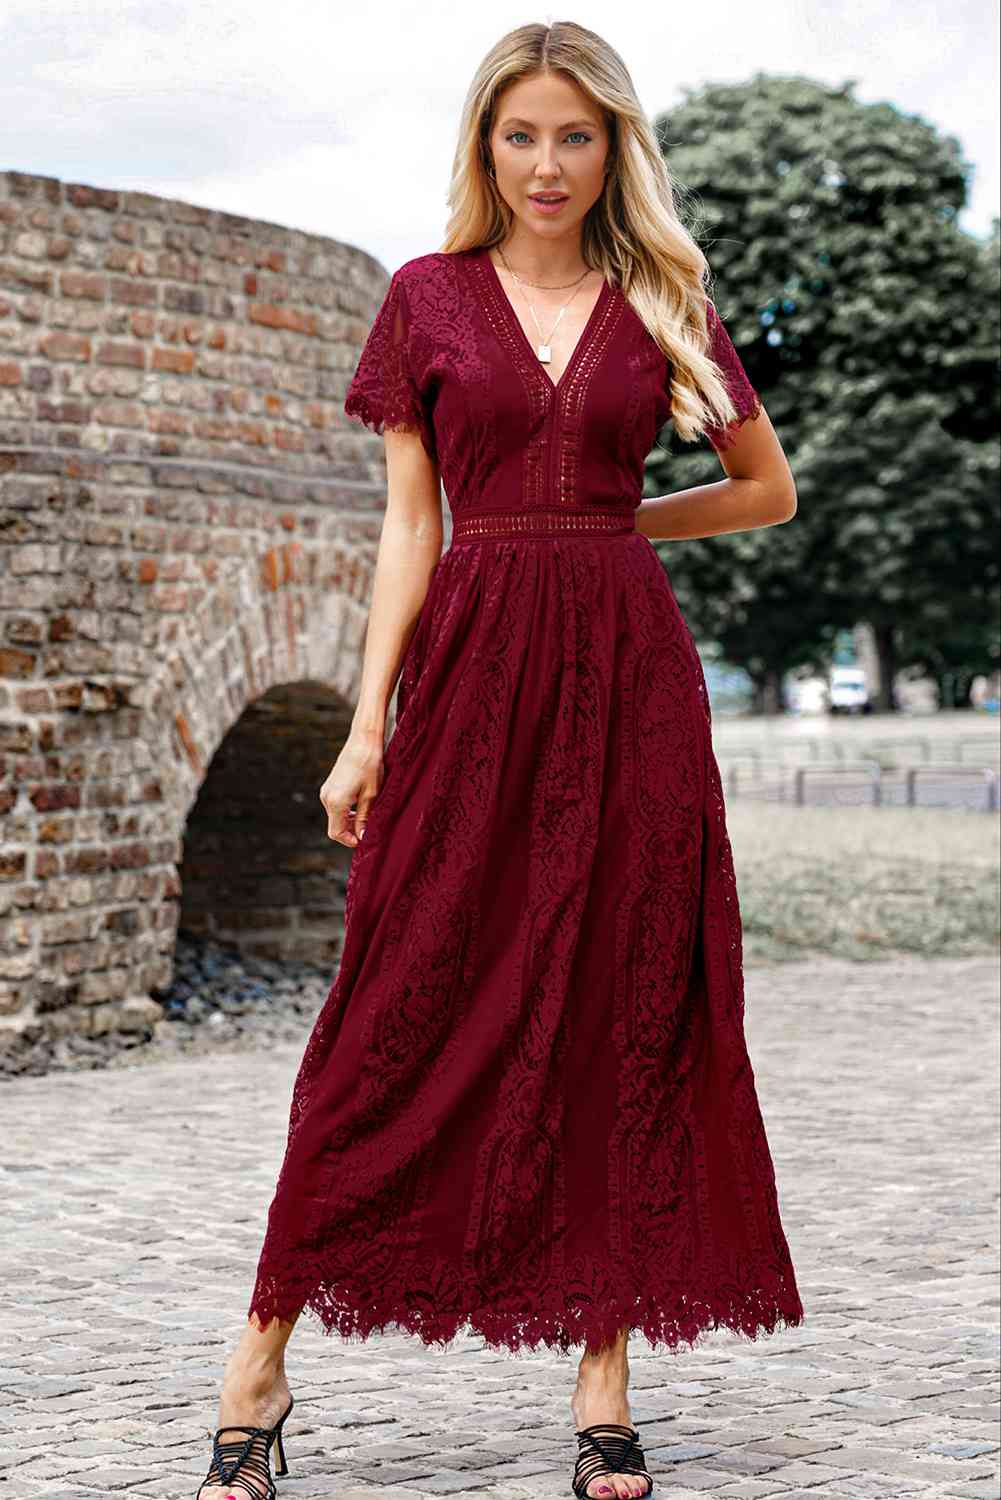 Scalloped Trim Lace Plunge Dress - Wine / S - All Dresses - Dresses - 11 - 2024